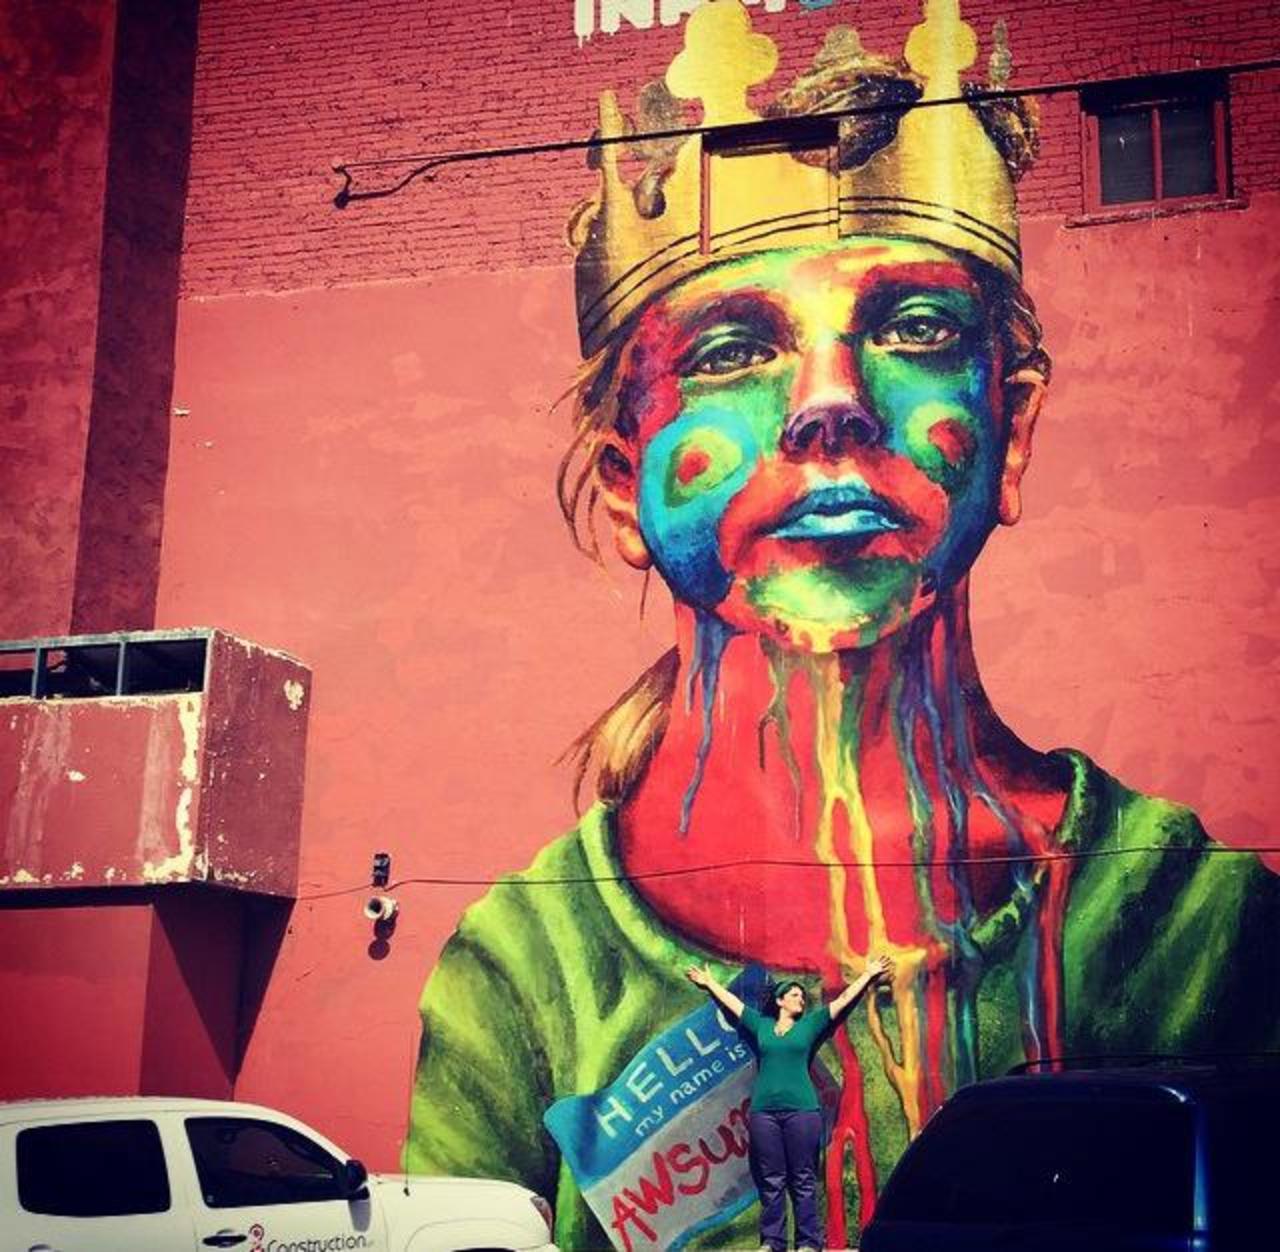 RT @GoogleStreetArt: Street Art by Naomi Haverland in Denver Colorado 

#art #arte #graffiti #streetart http://t.co/Fmy6HLxs04